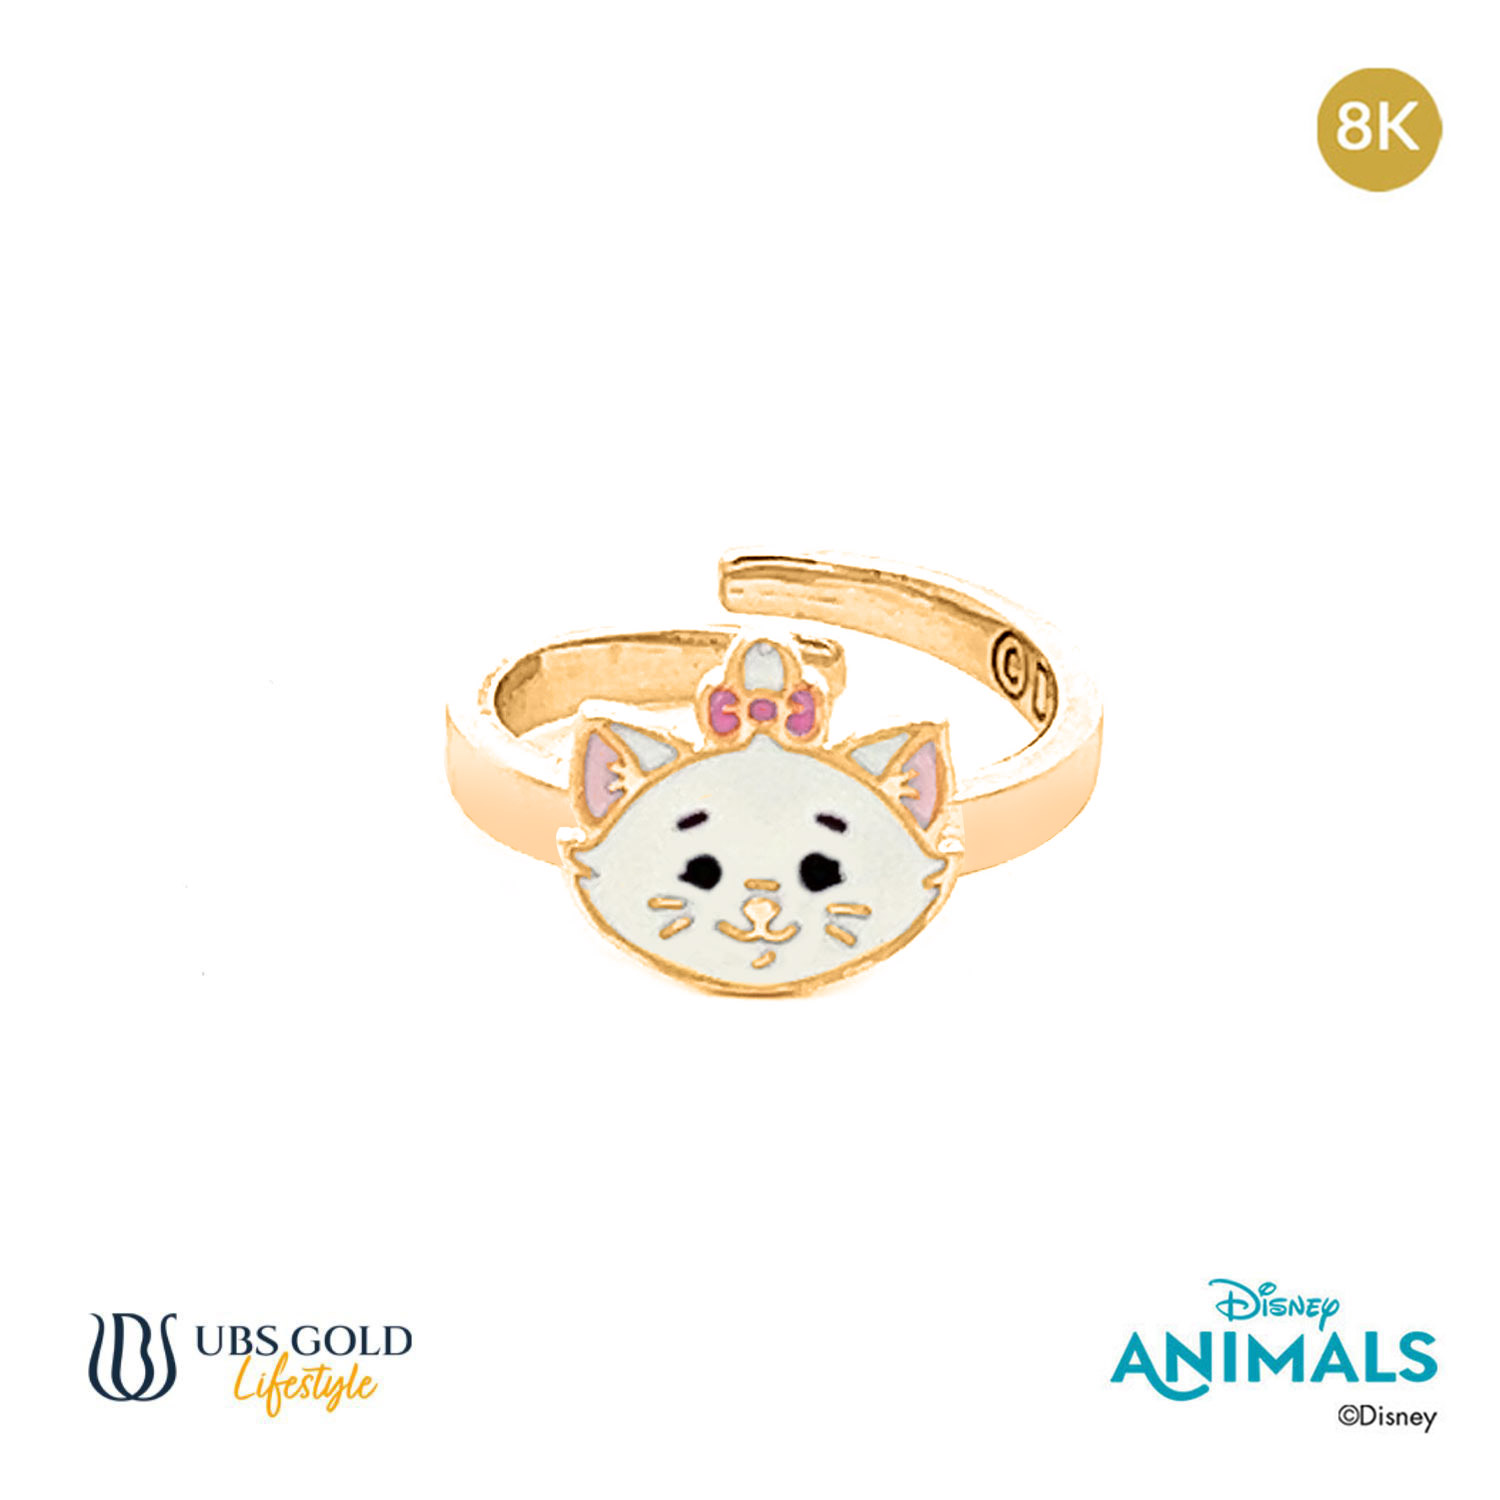 UBS Gold Cincin Emas Bayi Disney Animals - Cny0040K - 8K